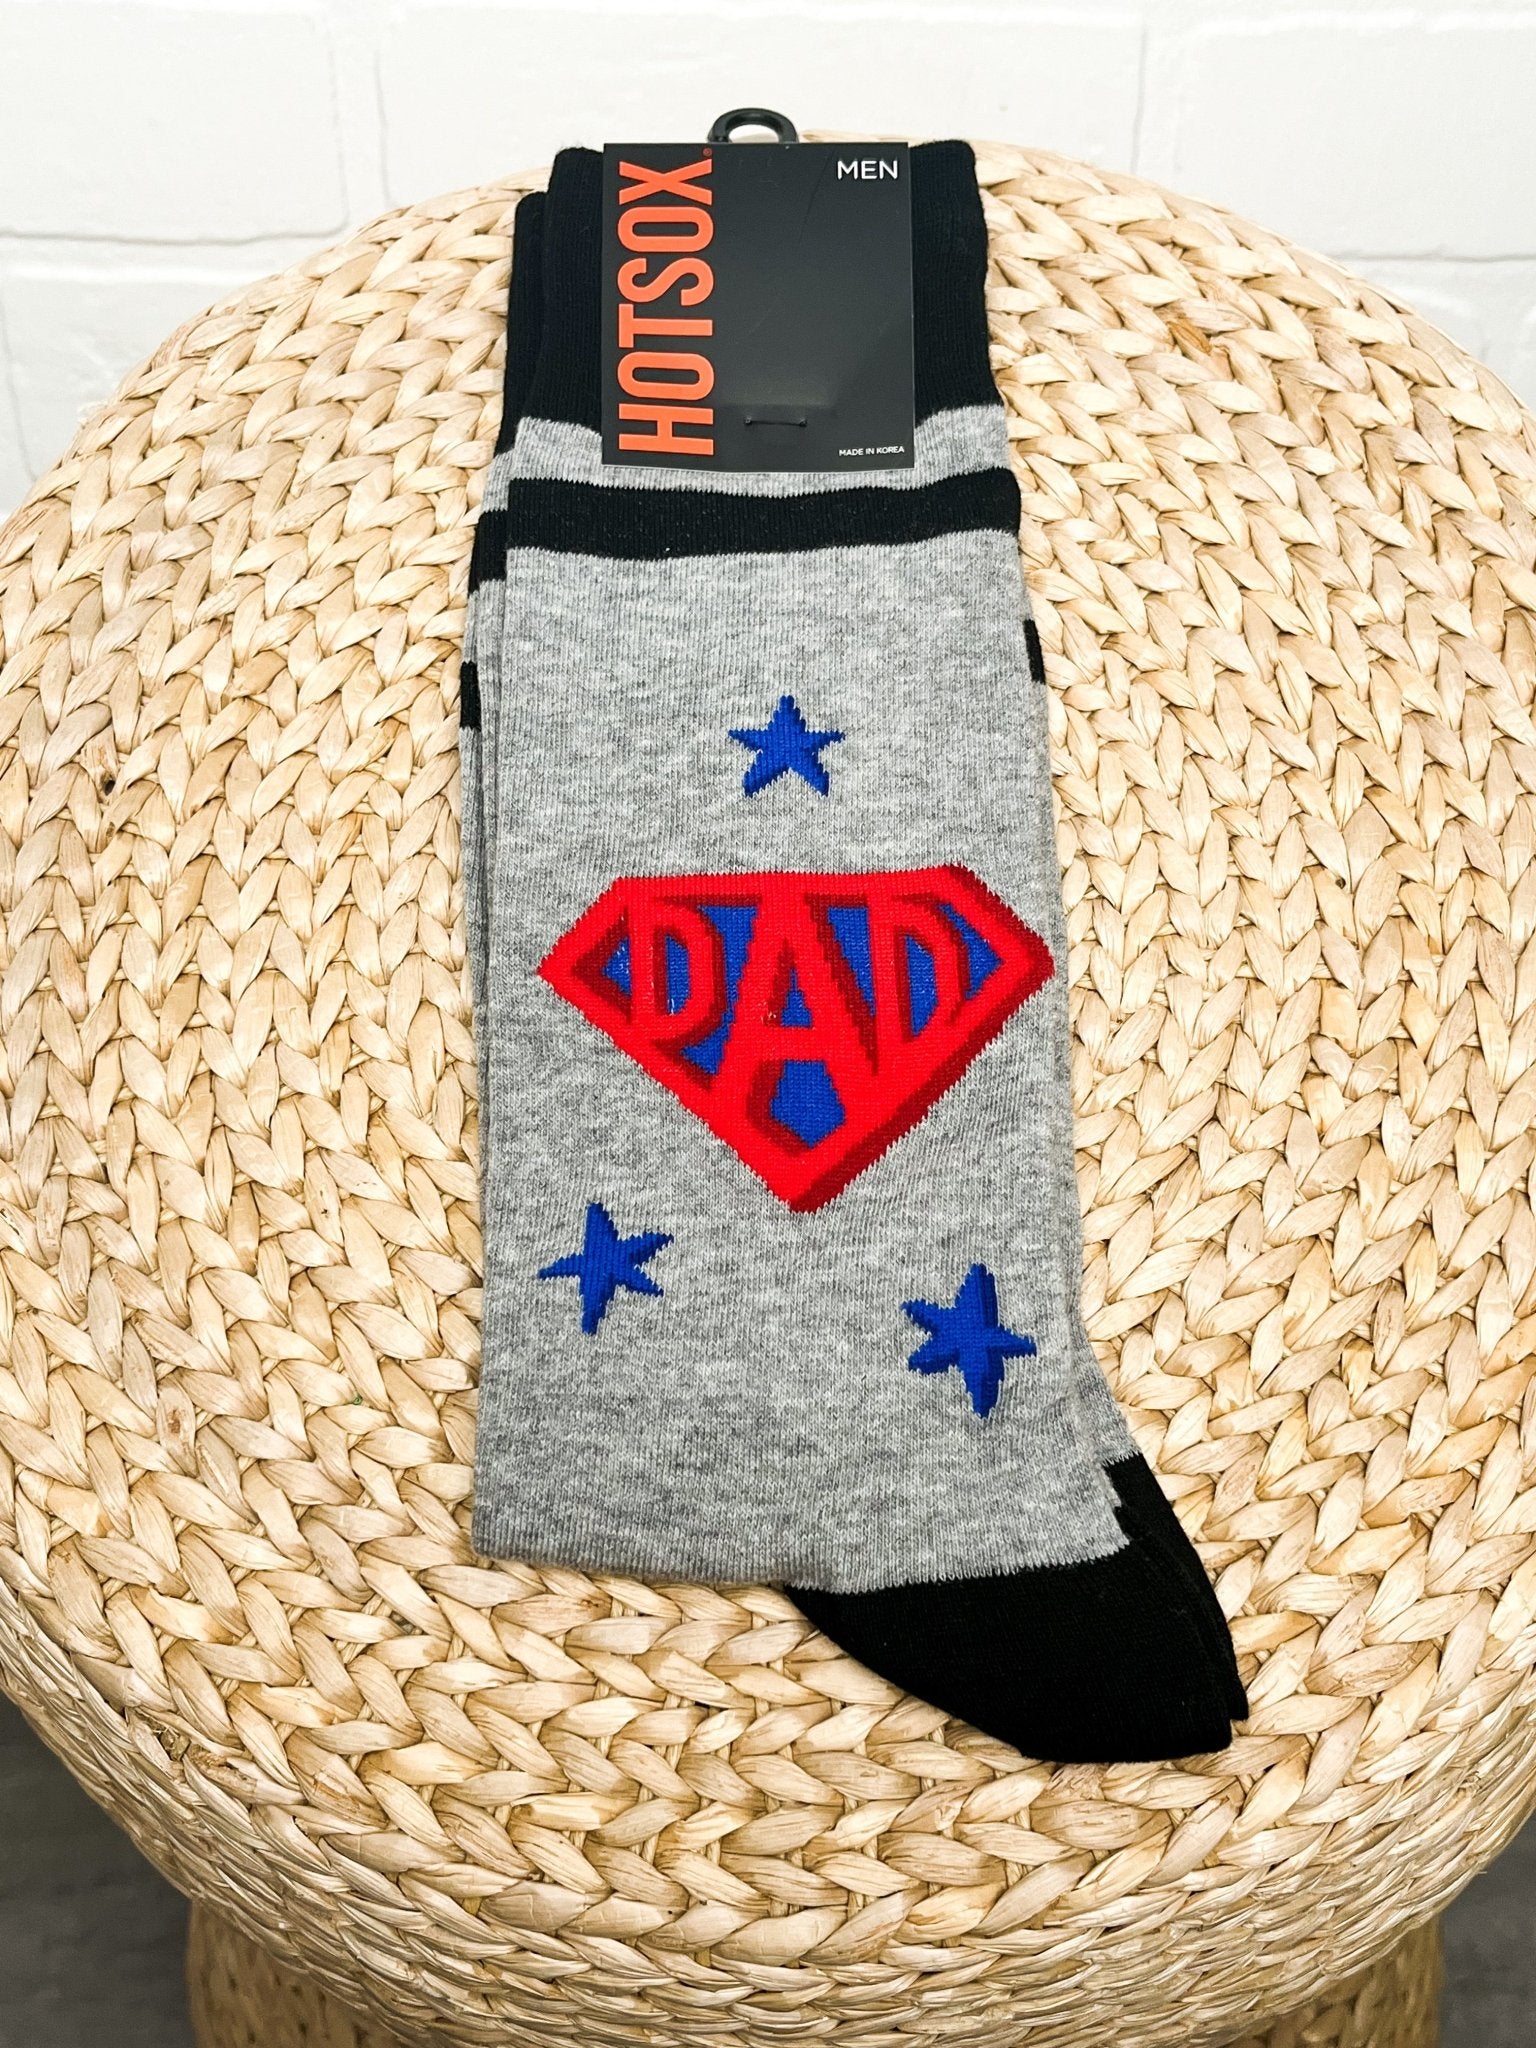 HotSox Superdad socks grey - Trendy Socks at Lush Fashion Lounge Boutique in Oklahoma City